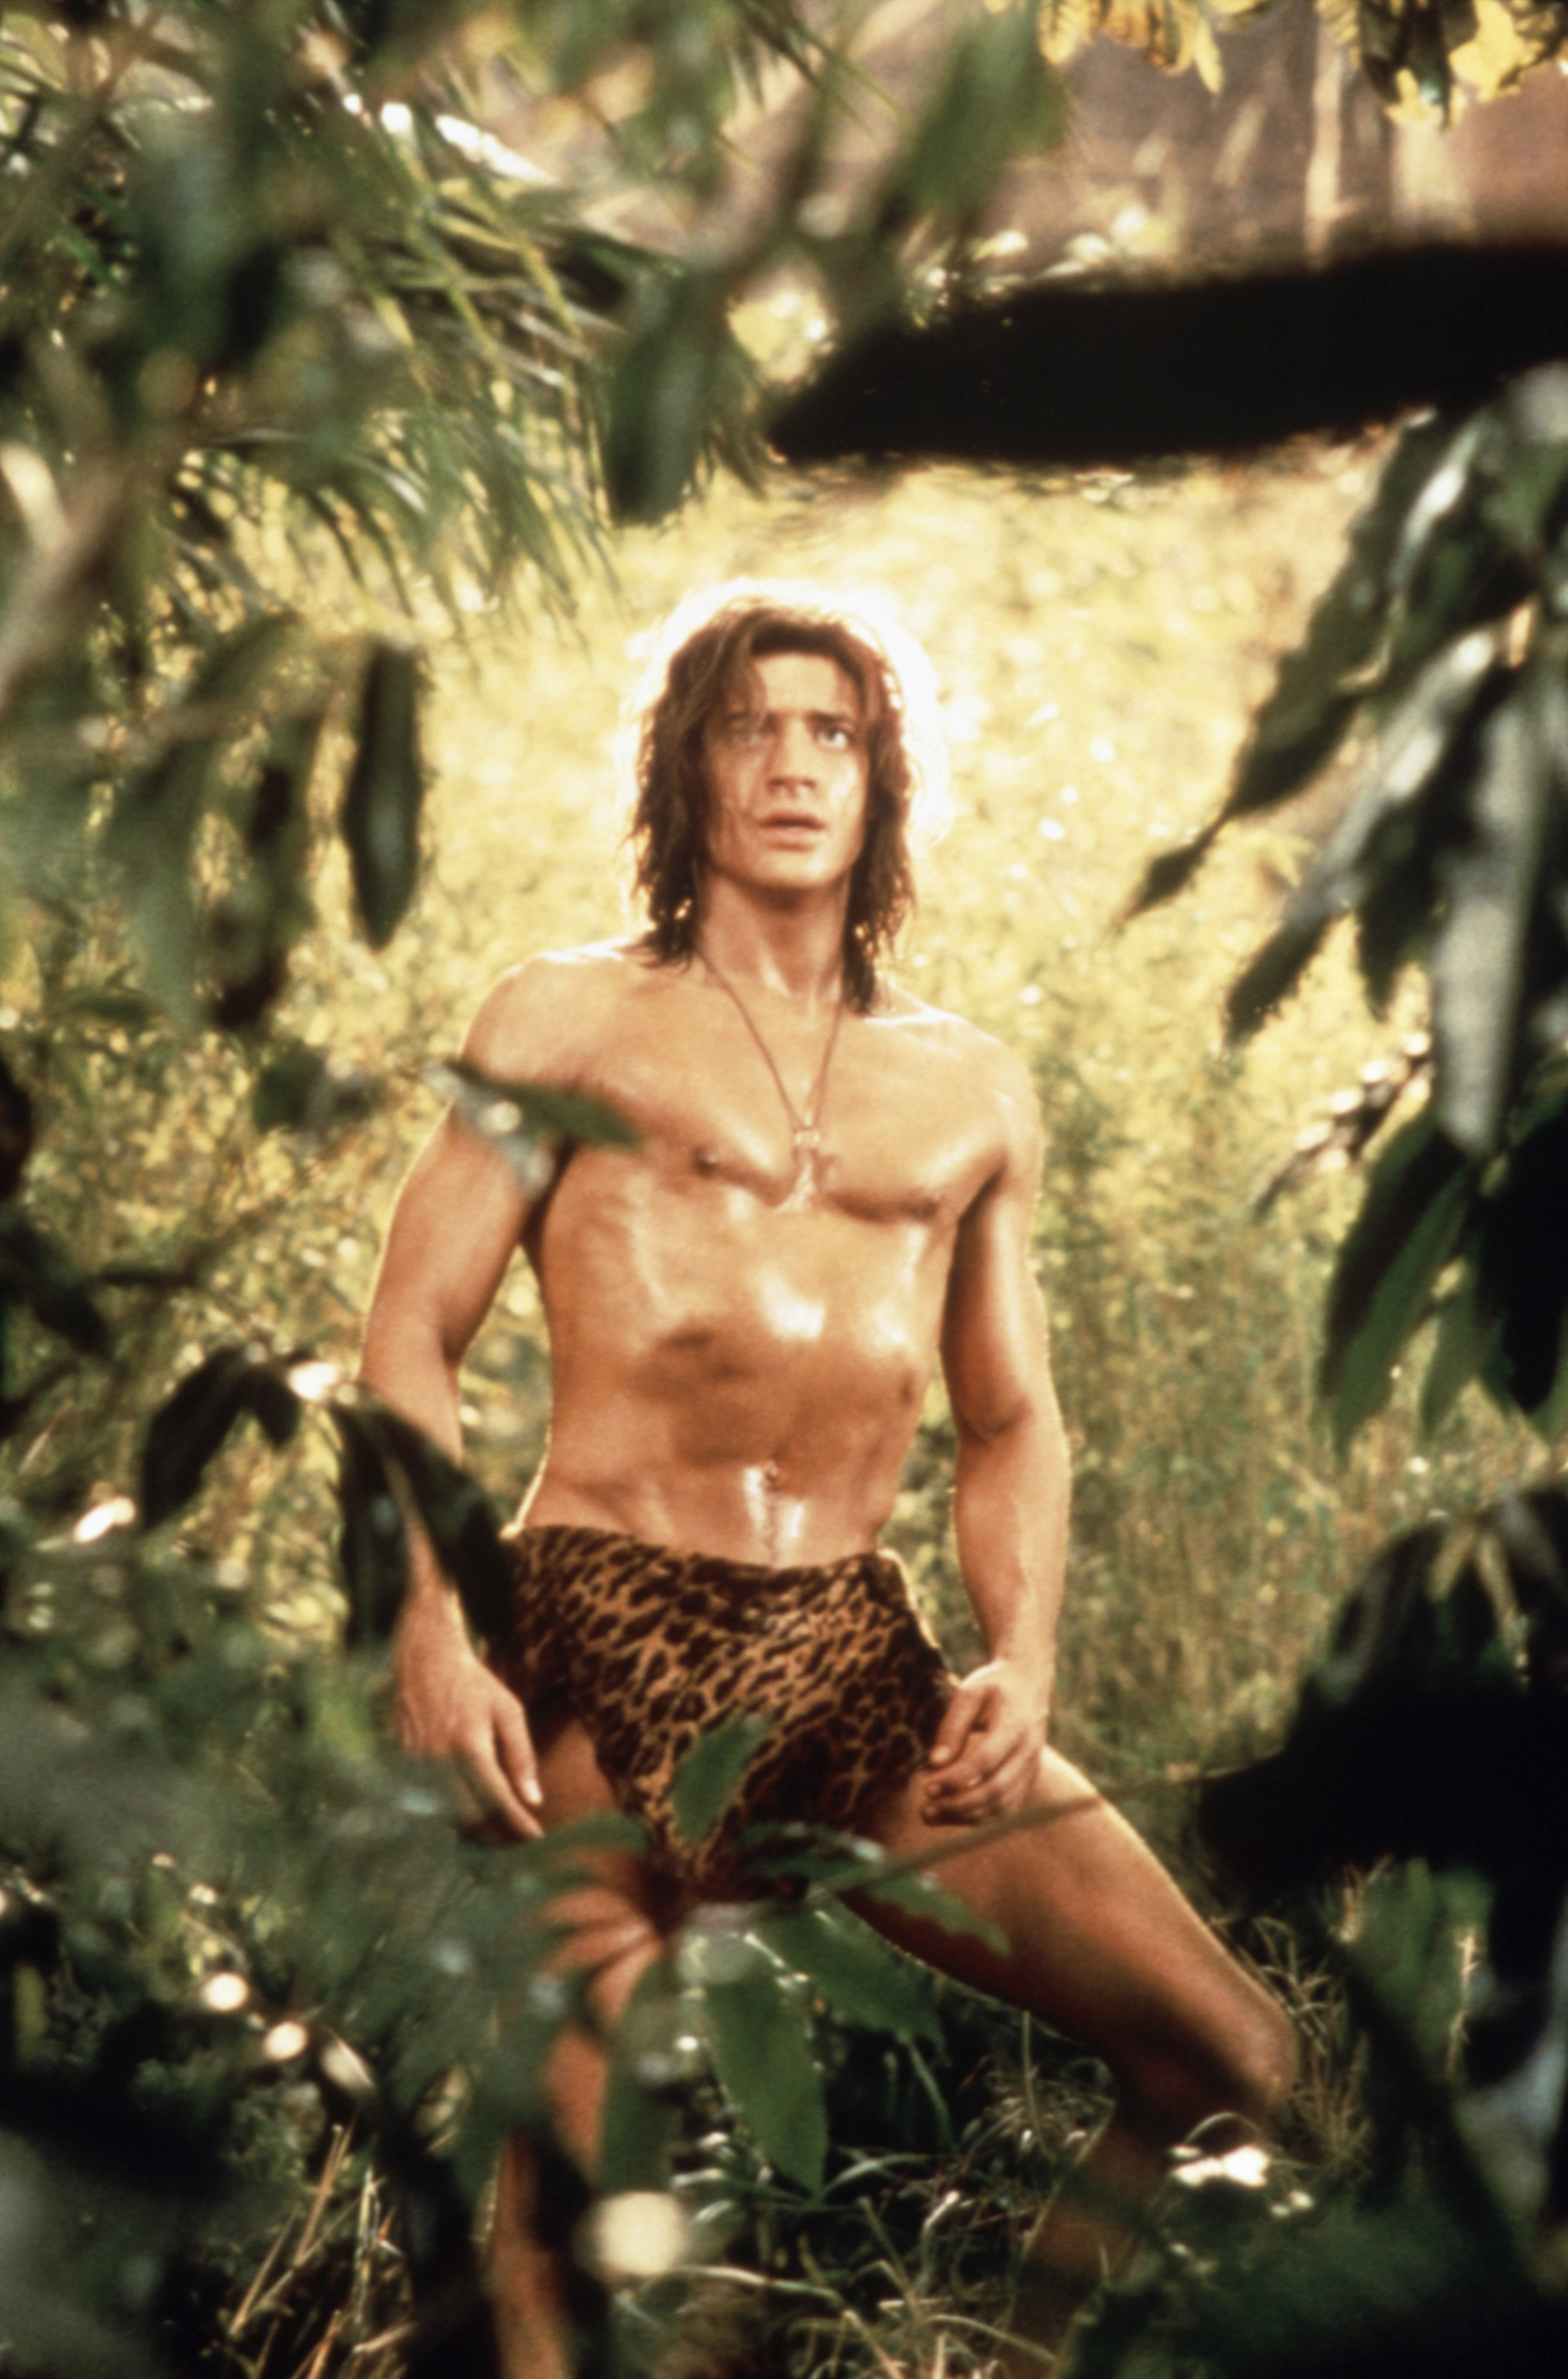 Brendan shirtless in the jungle